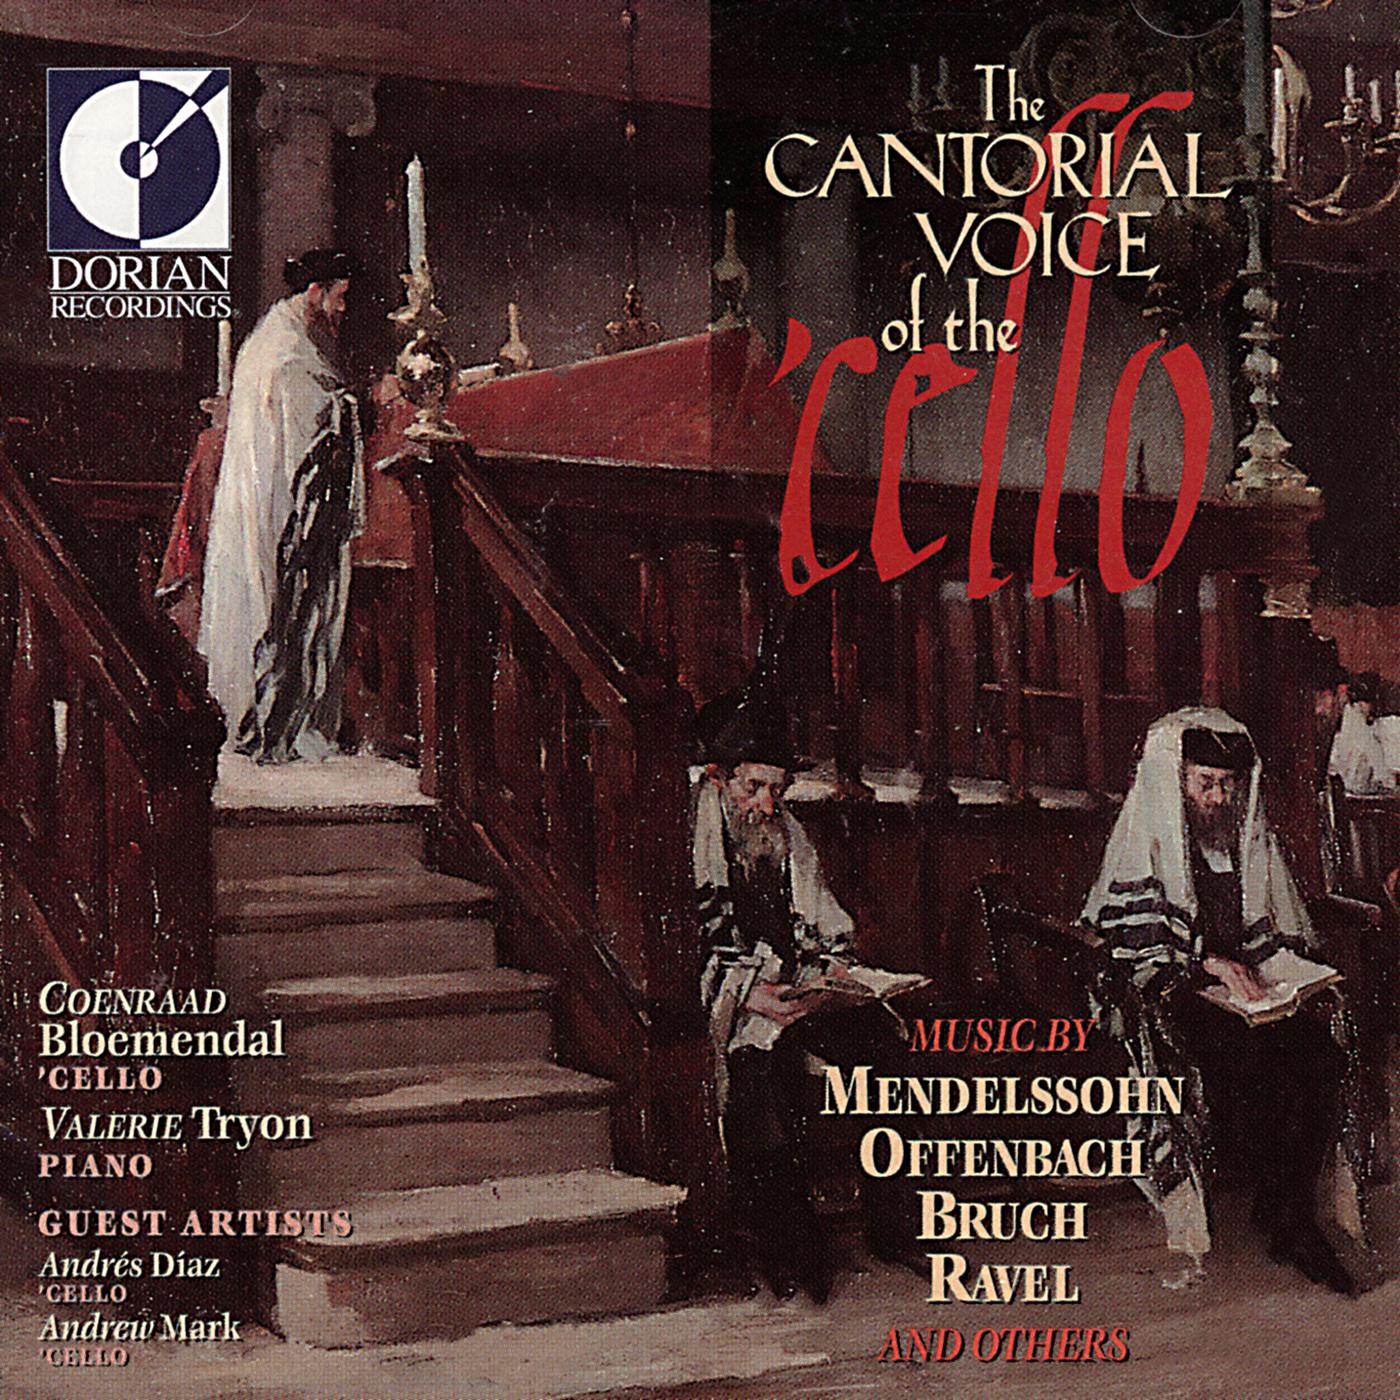 MENDELSSOHN, Felix: Cello Sonata No. 2 / BEN-HAIM, P.: Songs without Words (The Cantorial Voice of the Cello) (Bloemendal, Diaz, Mark, Tryon)